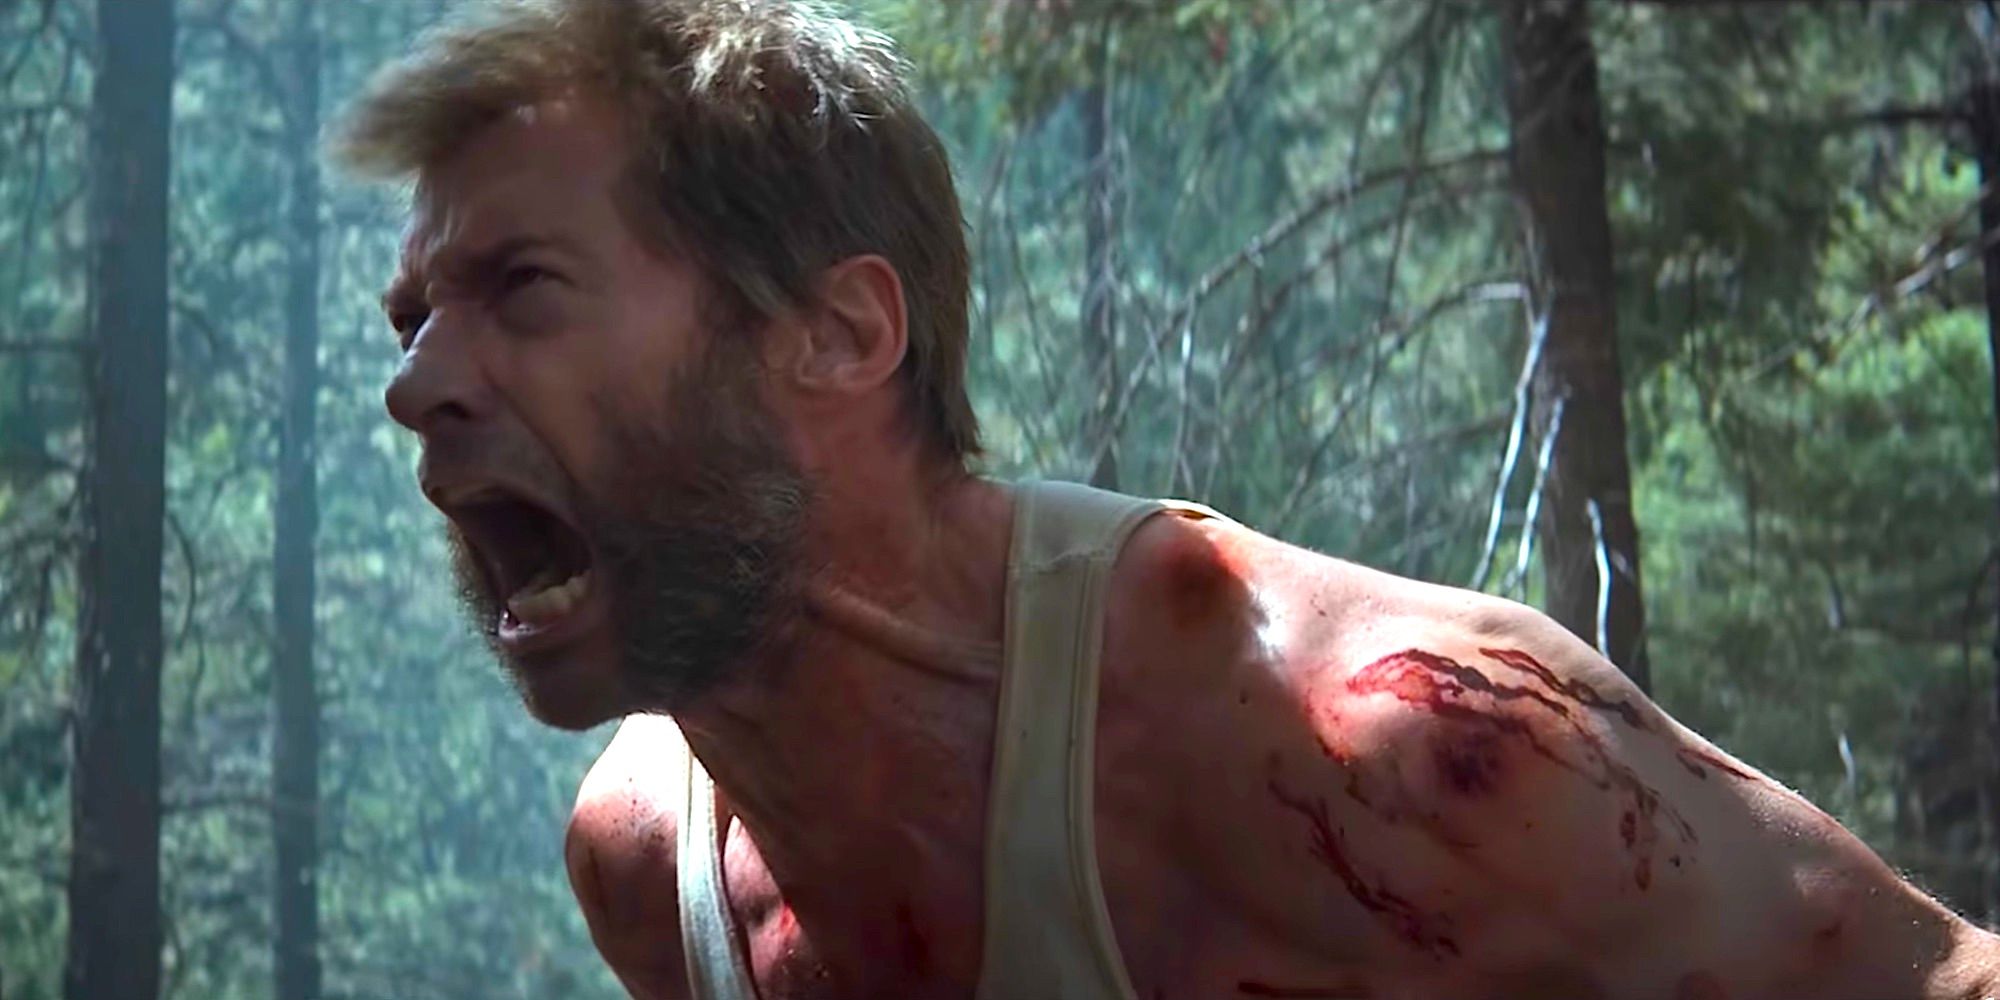 Wolverine screaming in the woods in Logan